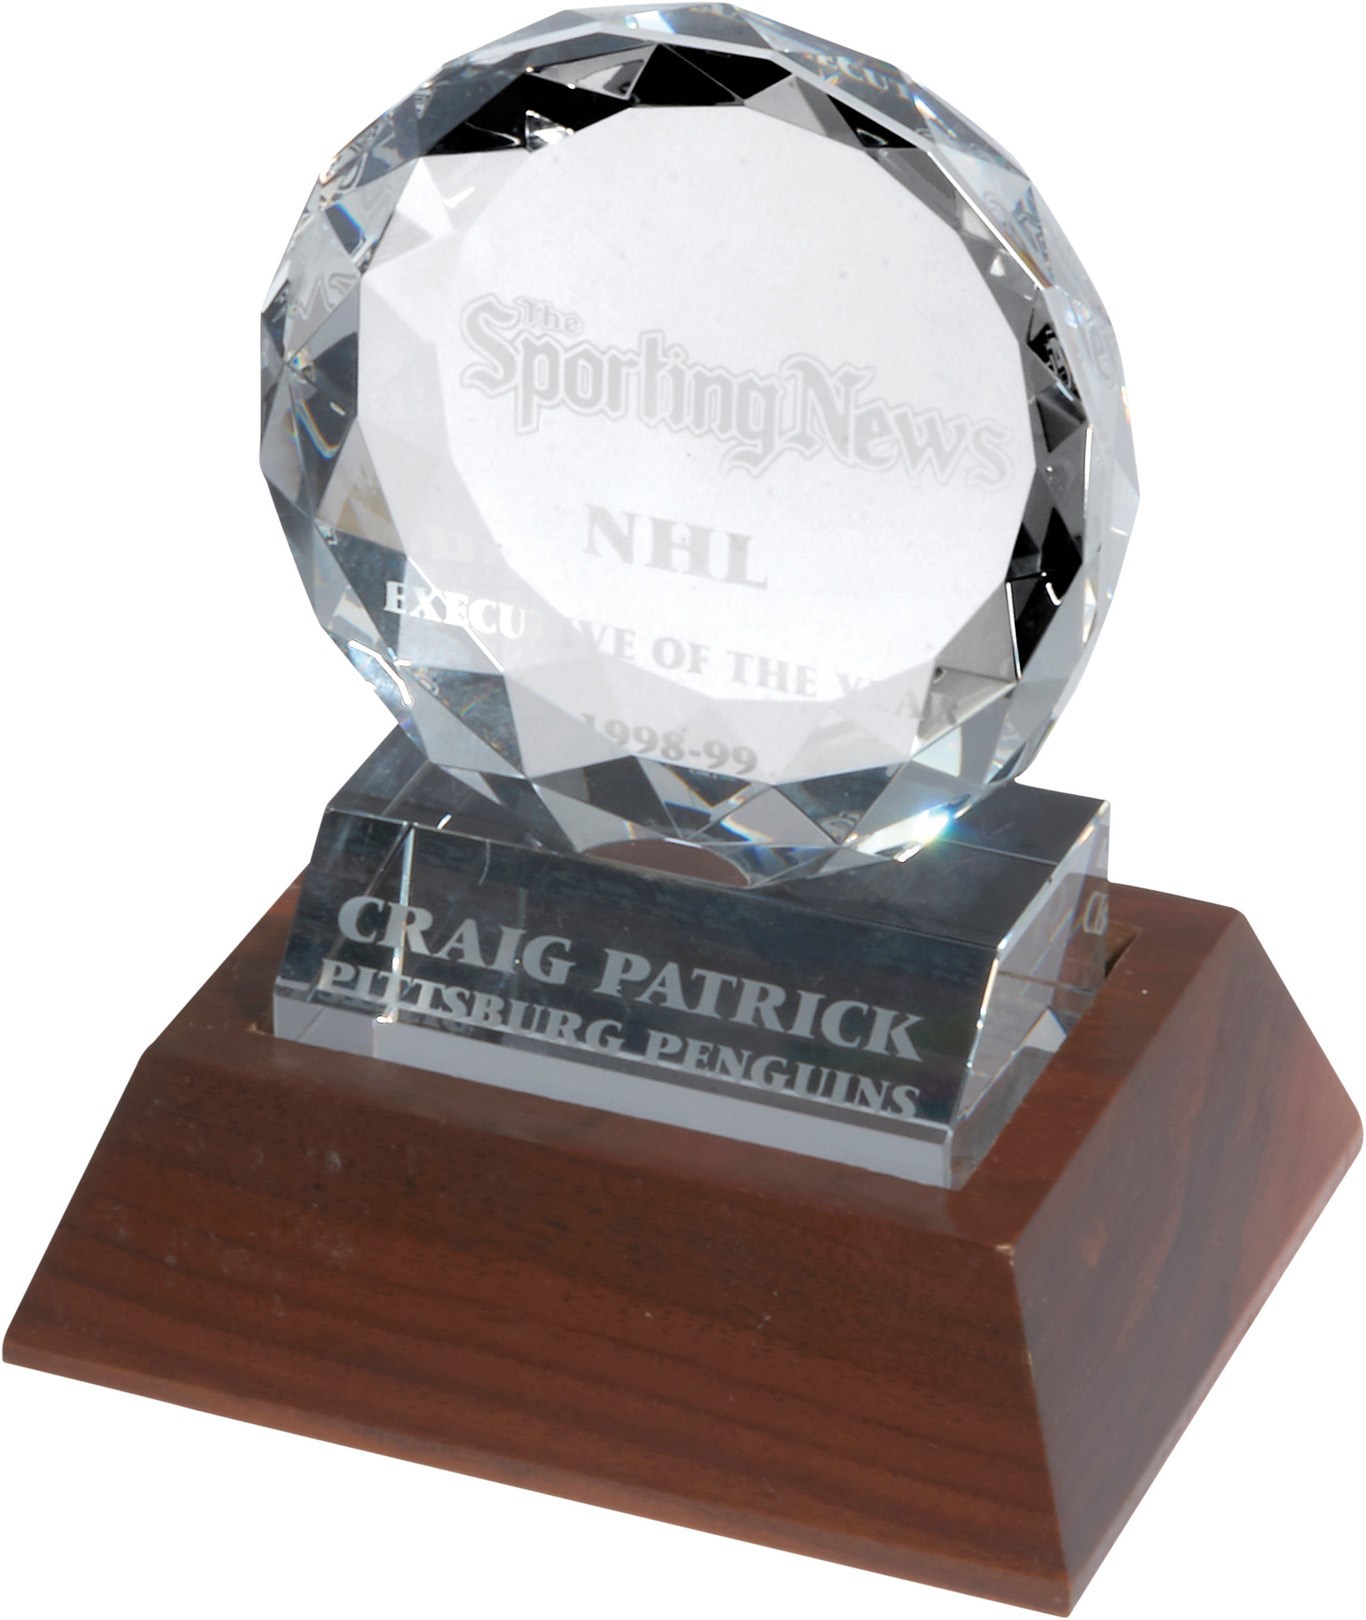 The Craig Patrick Hockey Collection - 1998-99 Craig Patrick Sporting News NHL Executive of the Year Award